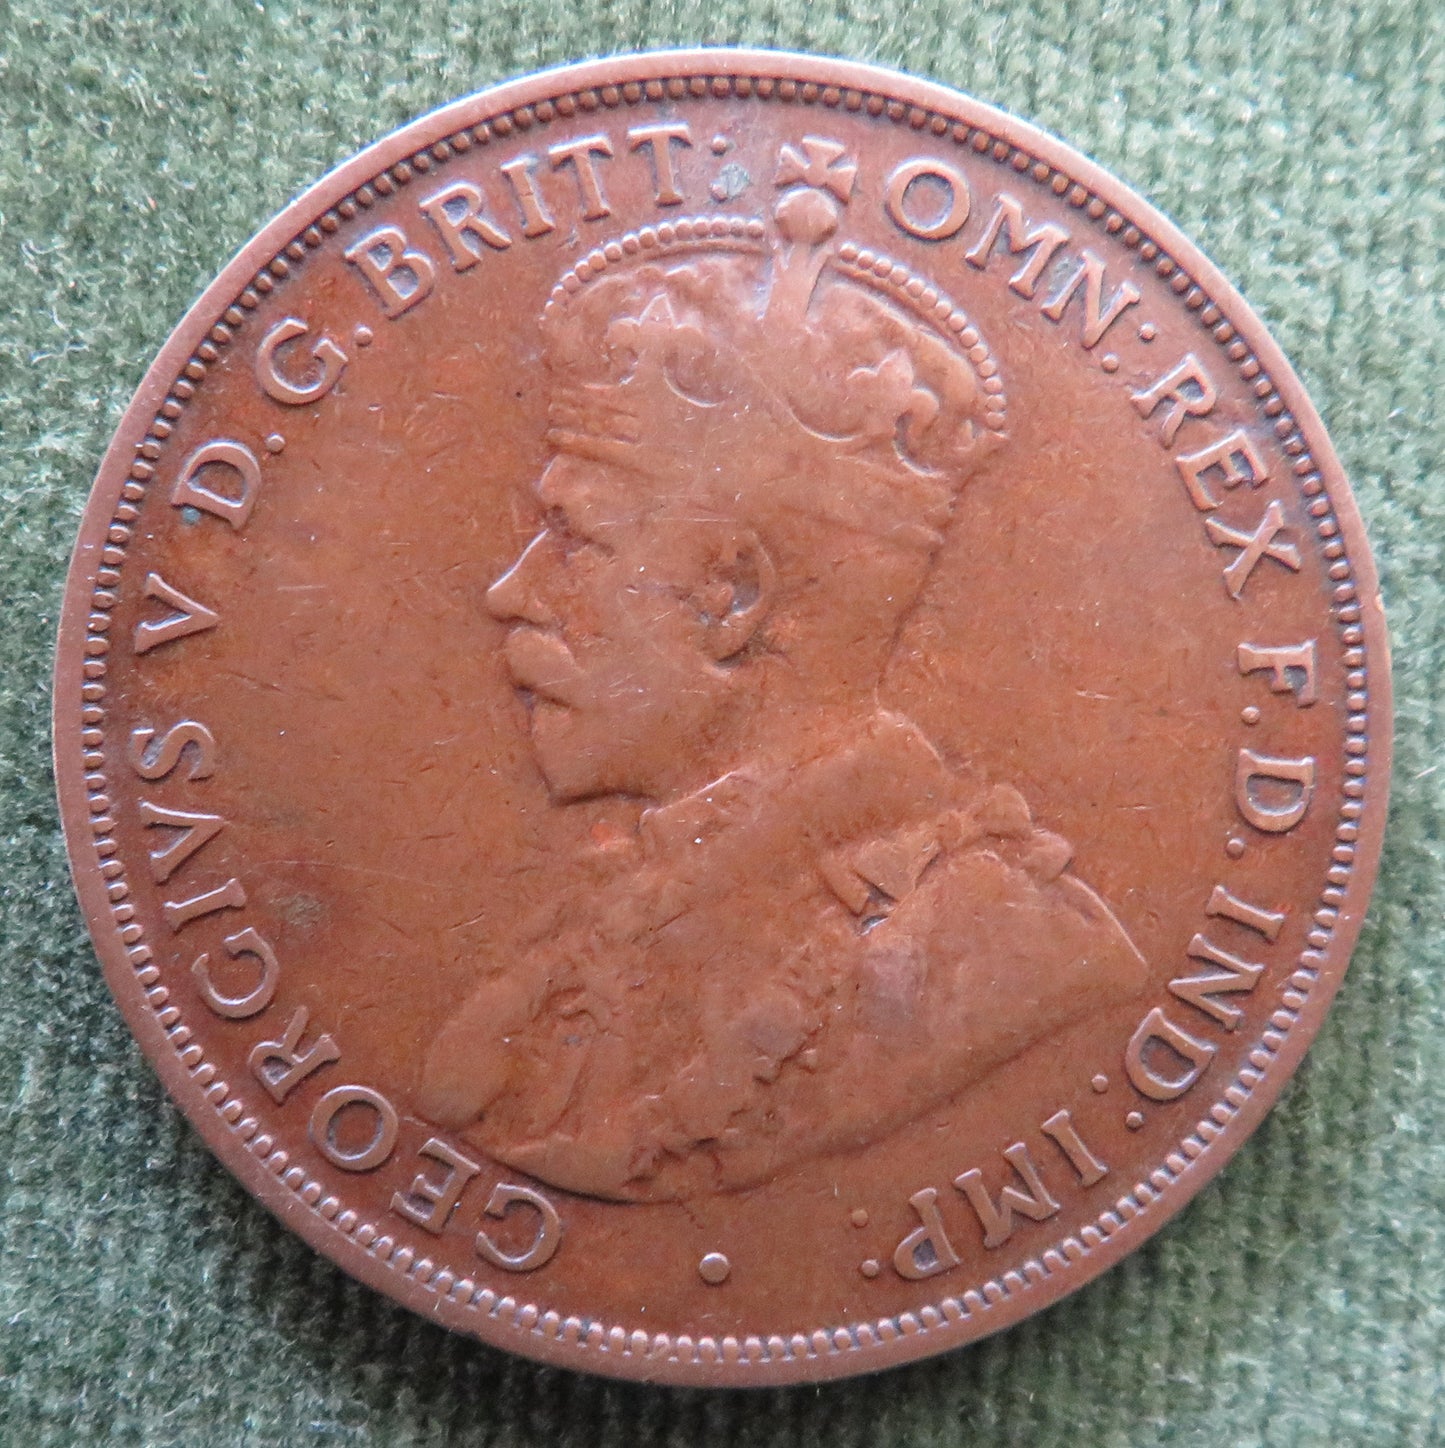 Australian 1915 H 1d 1 Penny King George V Coin